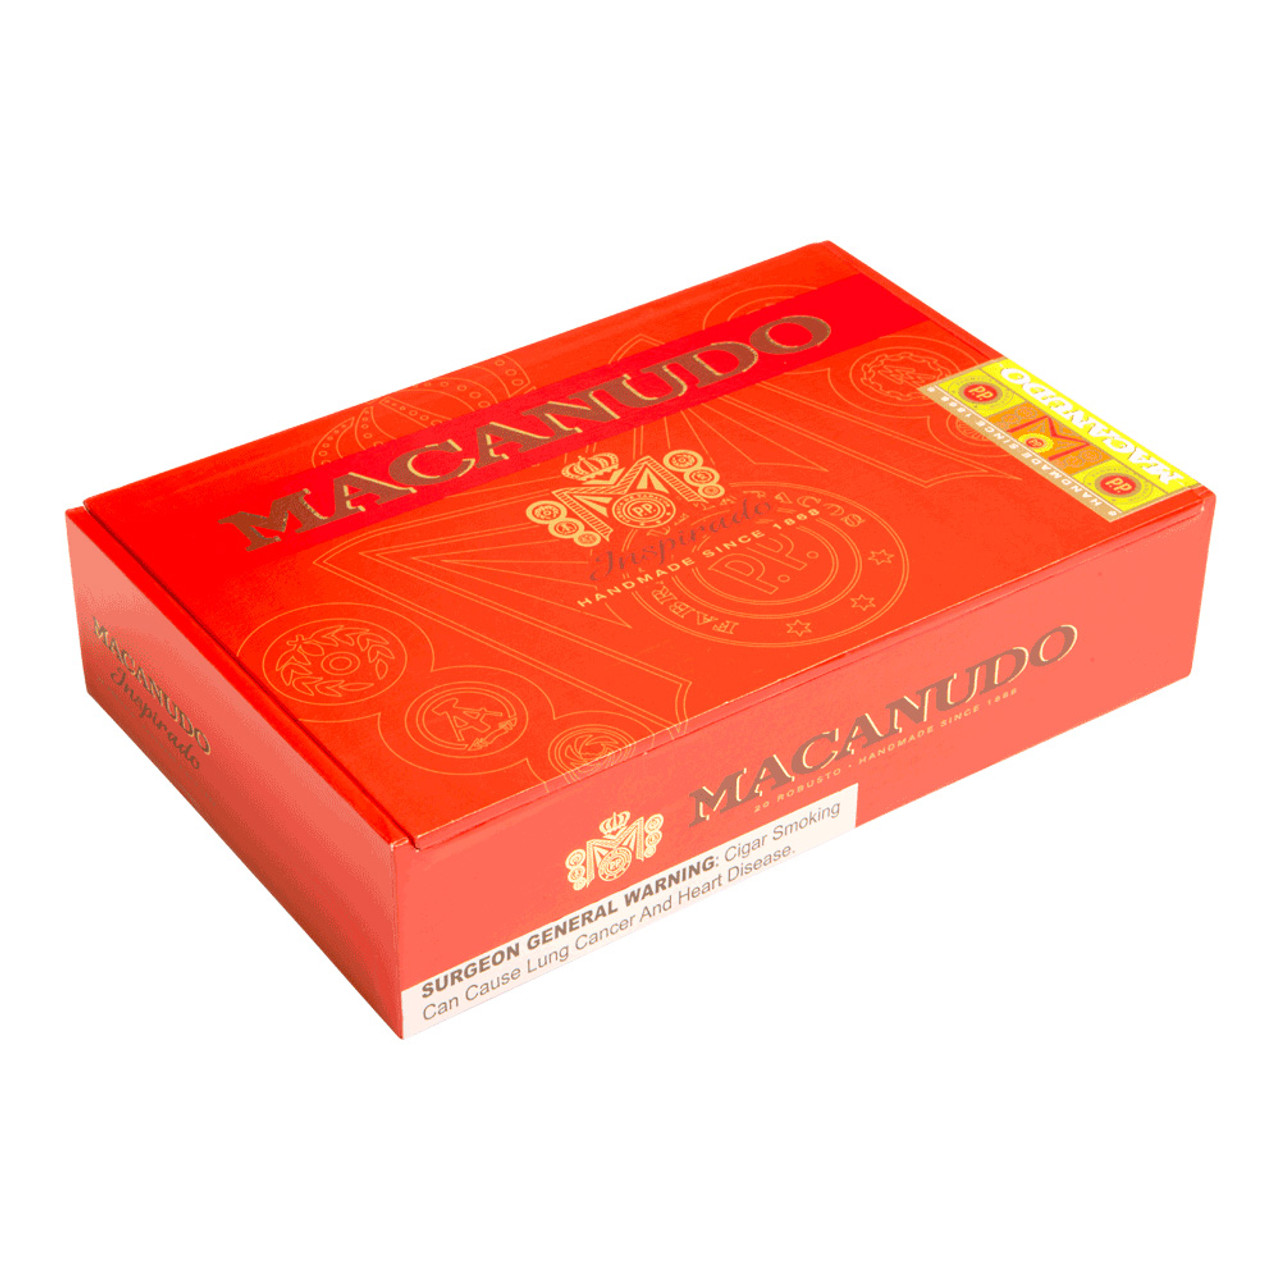 Macanudo Inspirado Orange Toro Cigars - 5.75 x 52 (Box of 20)